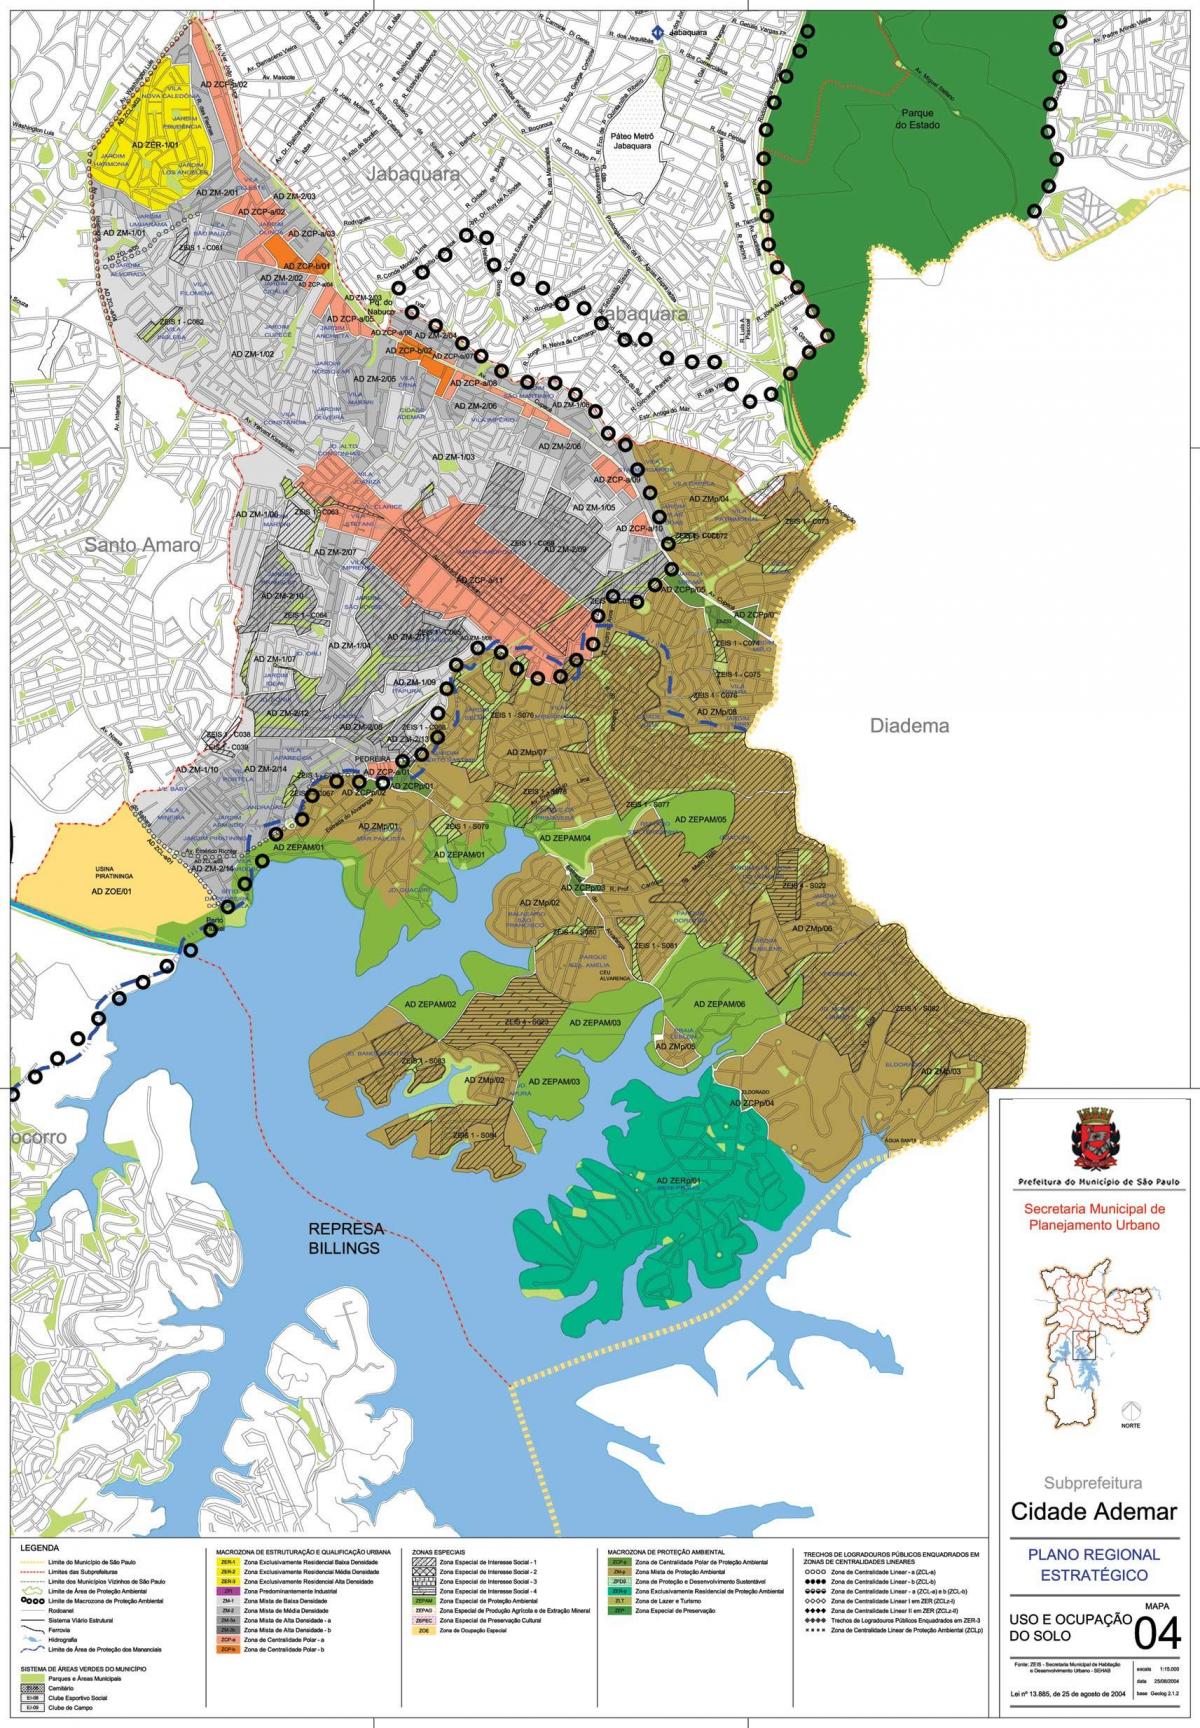 Map of Cidade Ademar São Paulo - Occupation of the soil